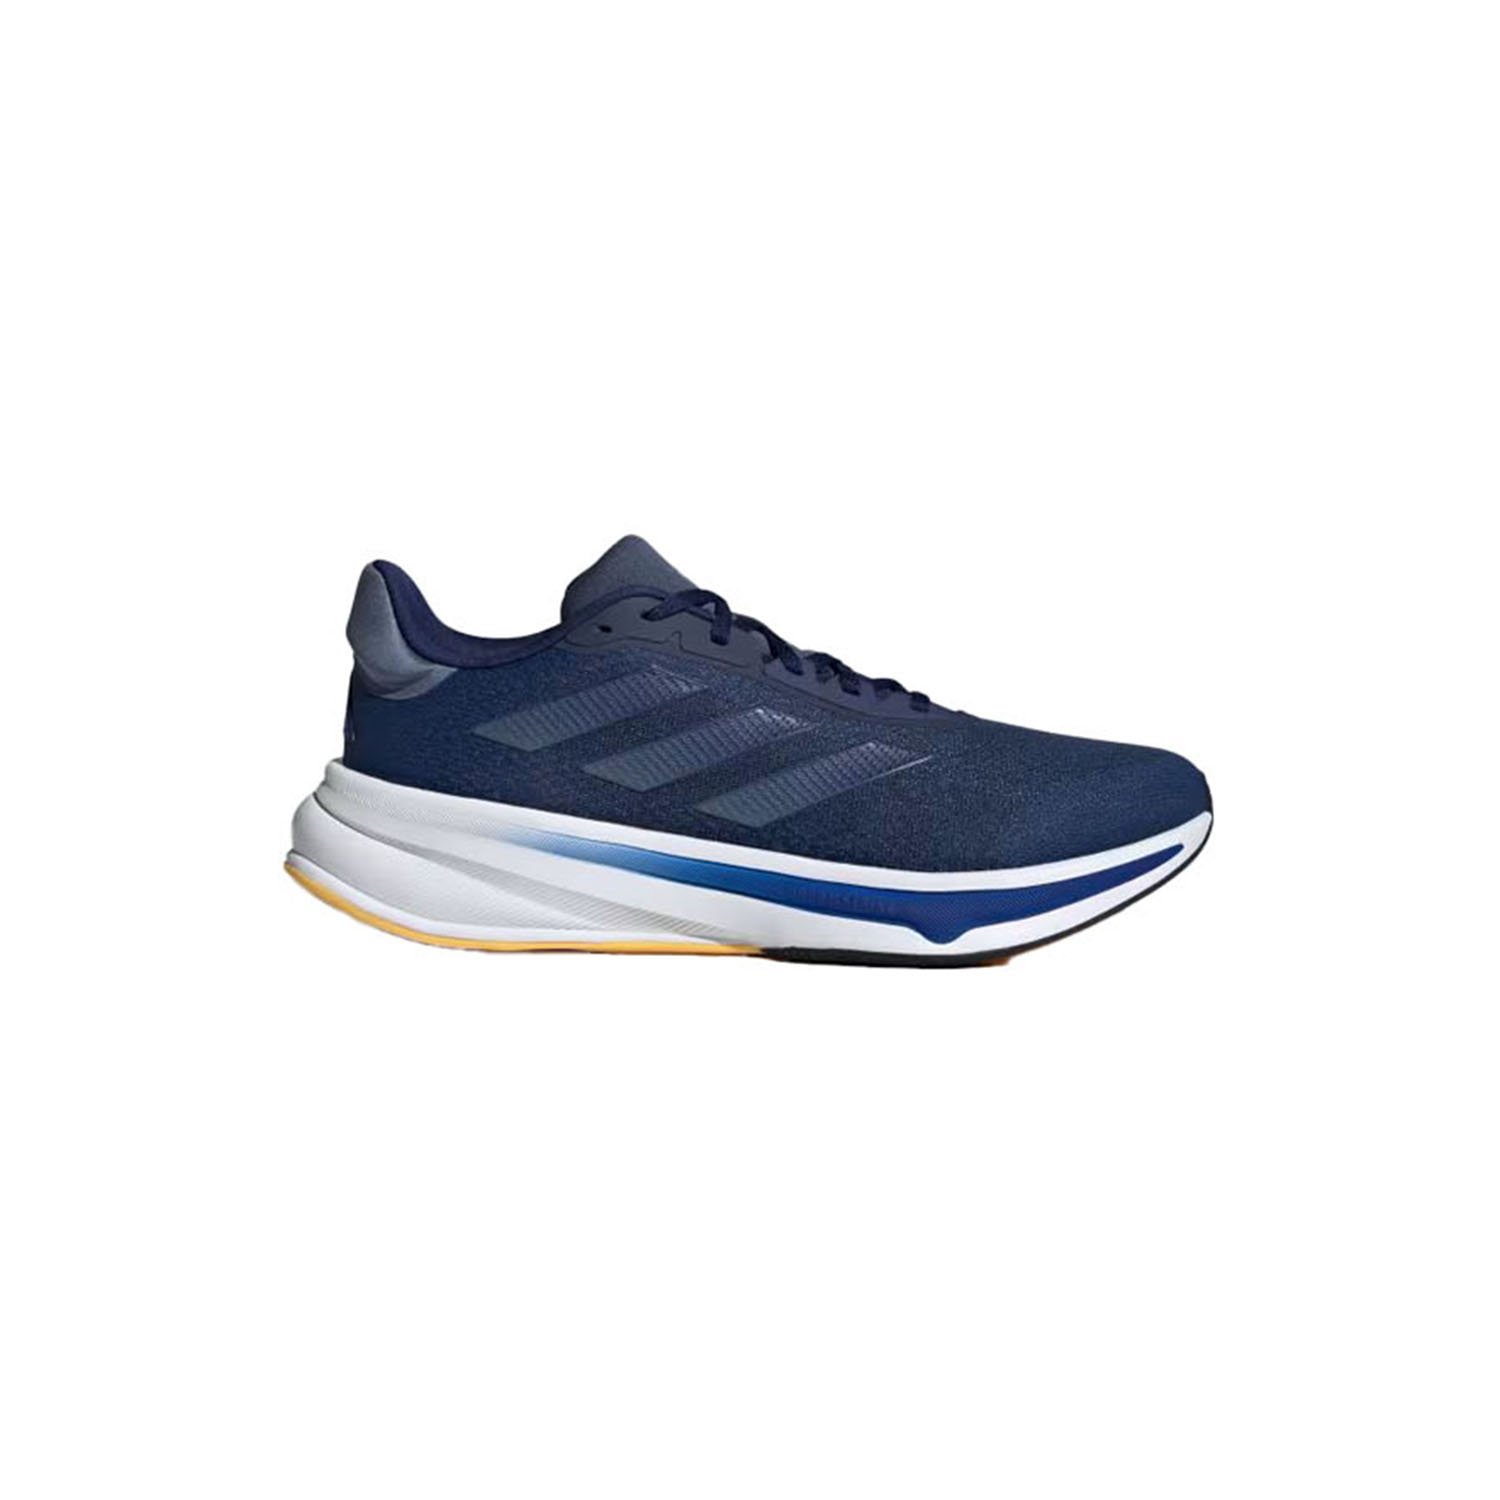 Adidas Response Super Erkek Koşu Ayakkabısı - Lacivert - 1